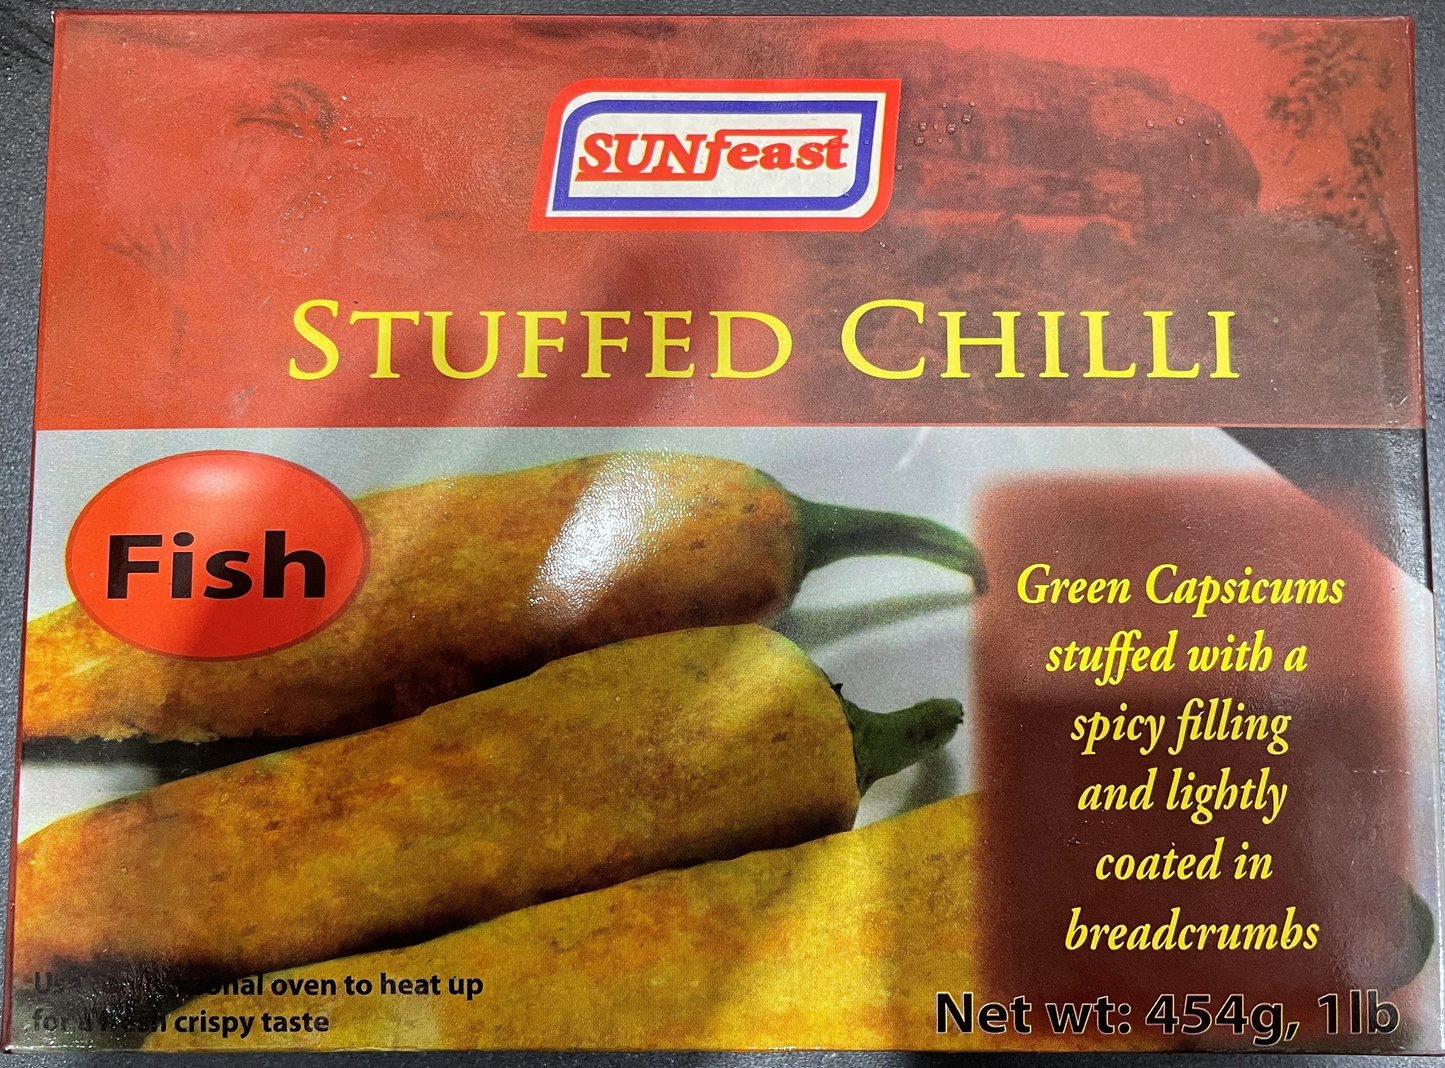 Sunfeast Stuffed Chilli Fish